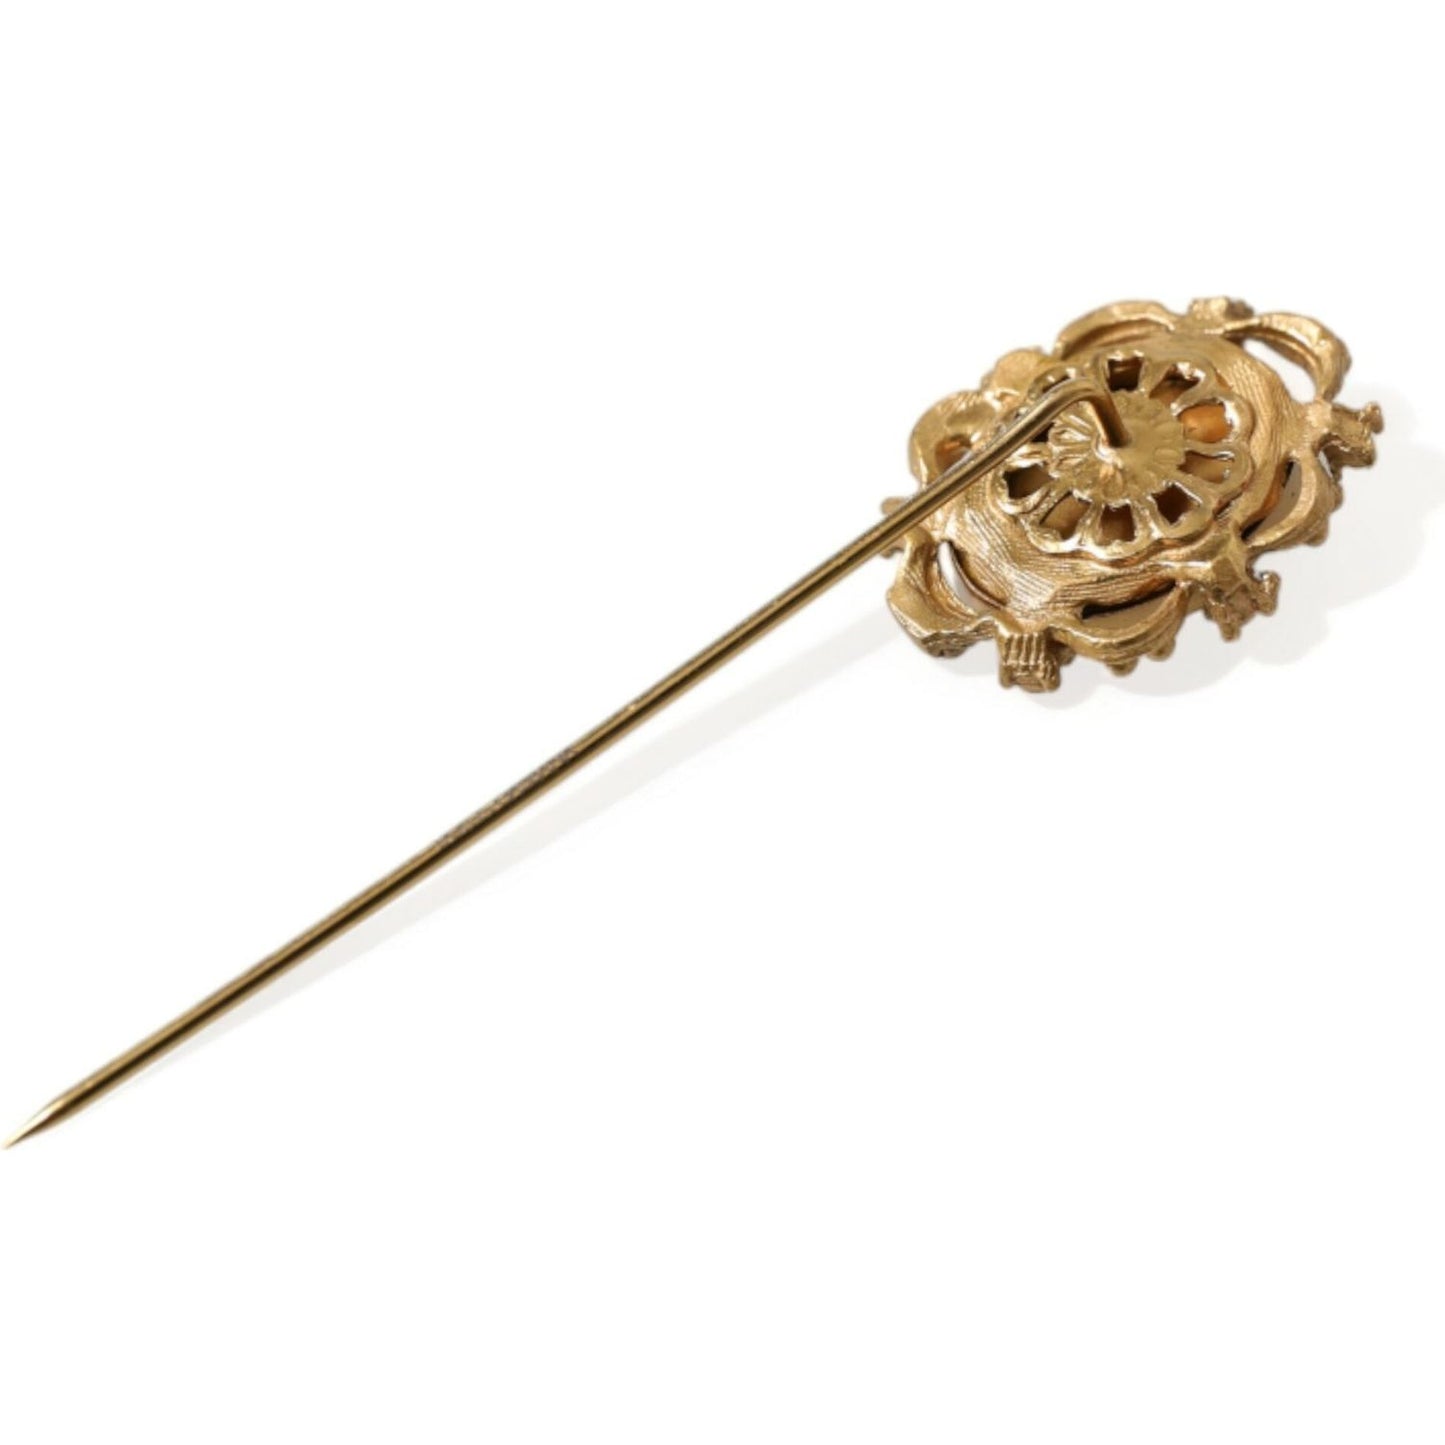 Dolce & Gabbana Elegant Gold-Tone Gemstone Pin Brooch elegant-gold-tone-gemstone-pin-brooch